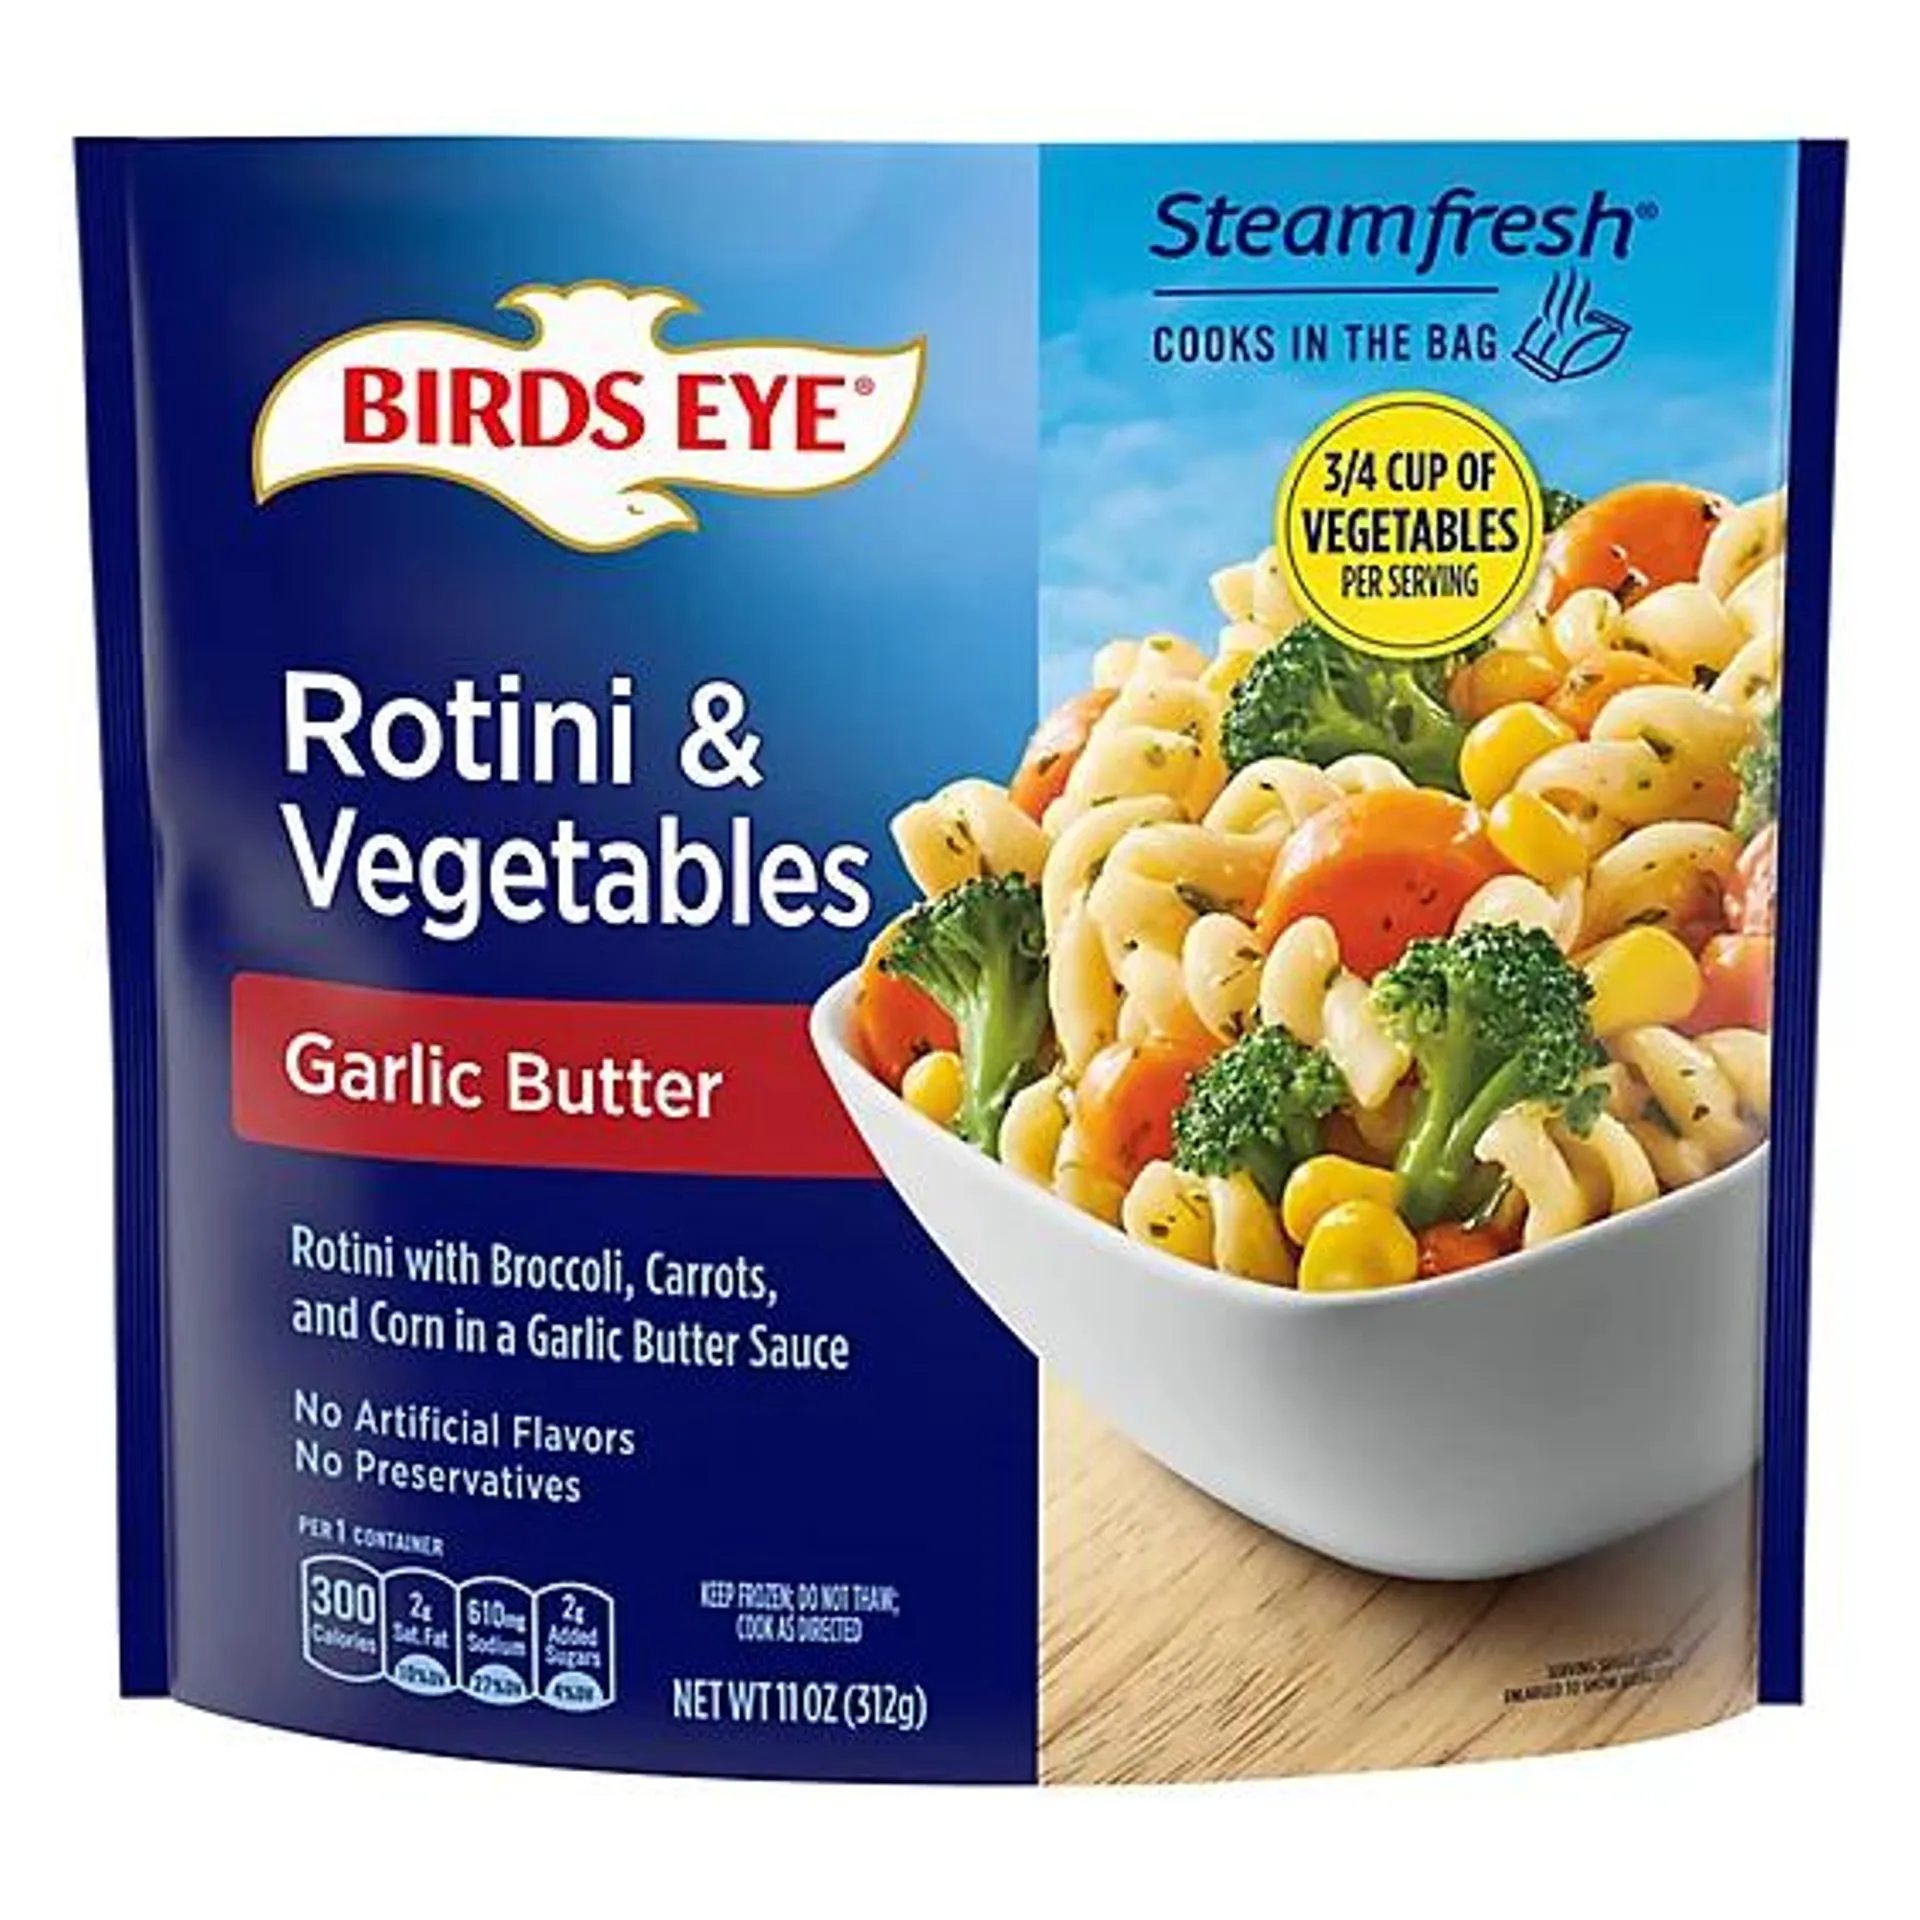 Birds Eye Steamfresh Rotini And Vegetables Frozen Side - 11 Oz